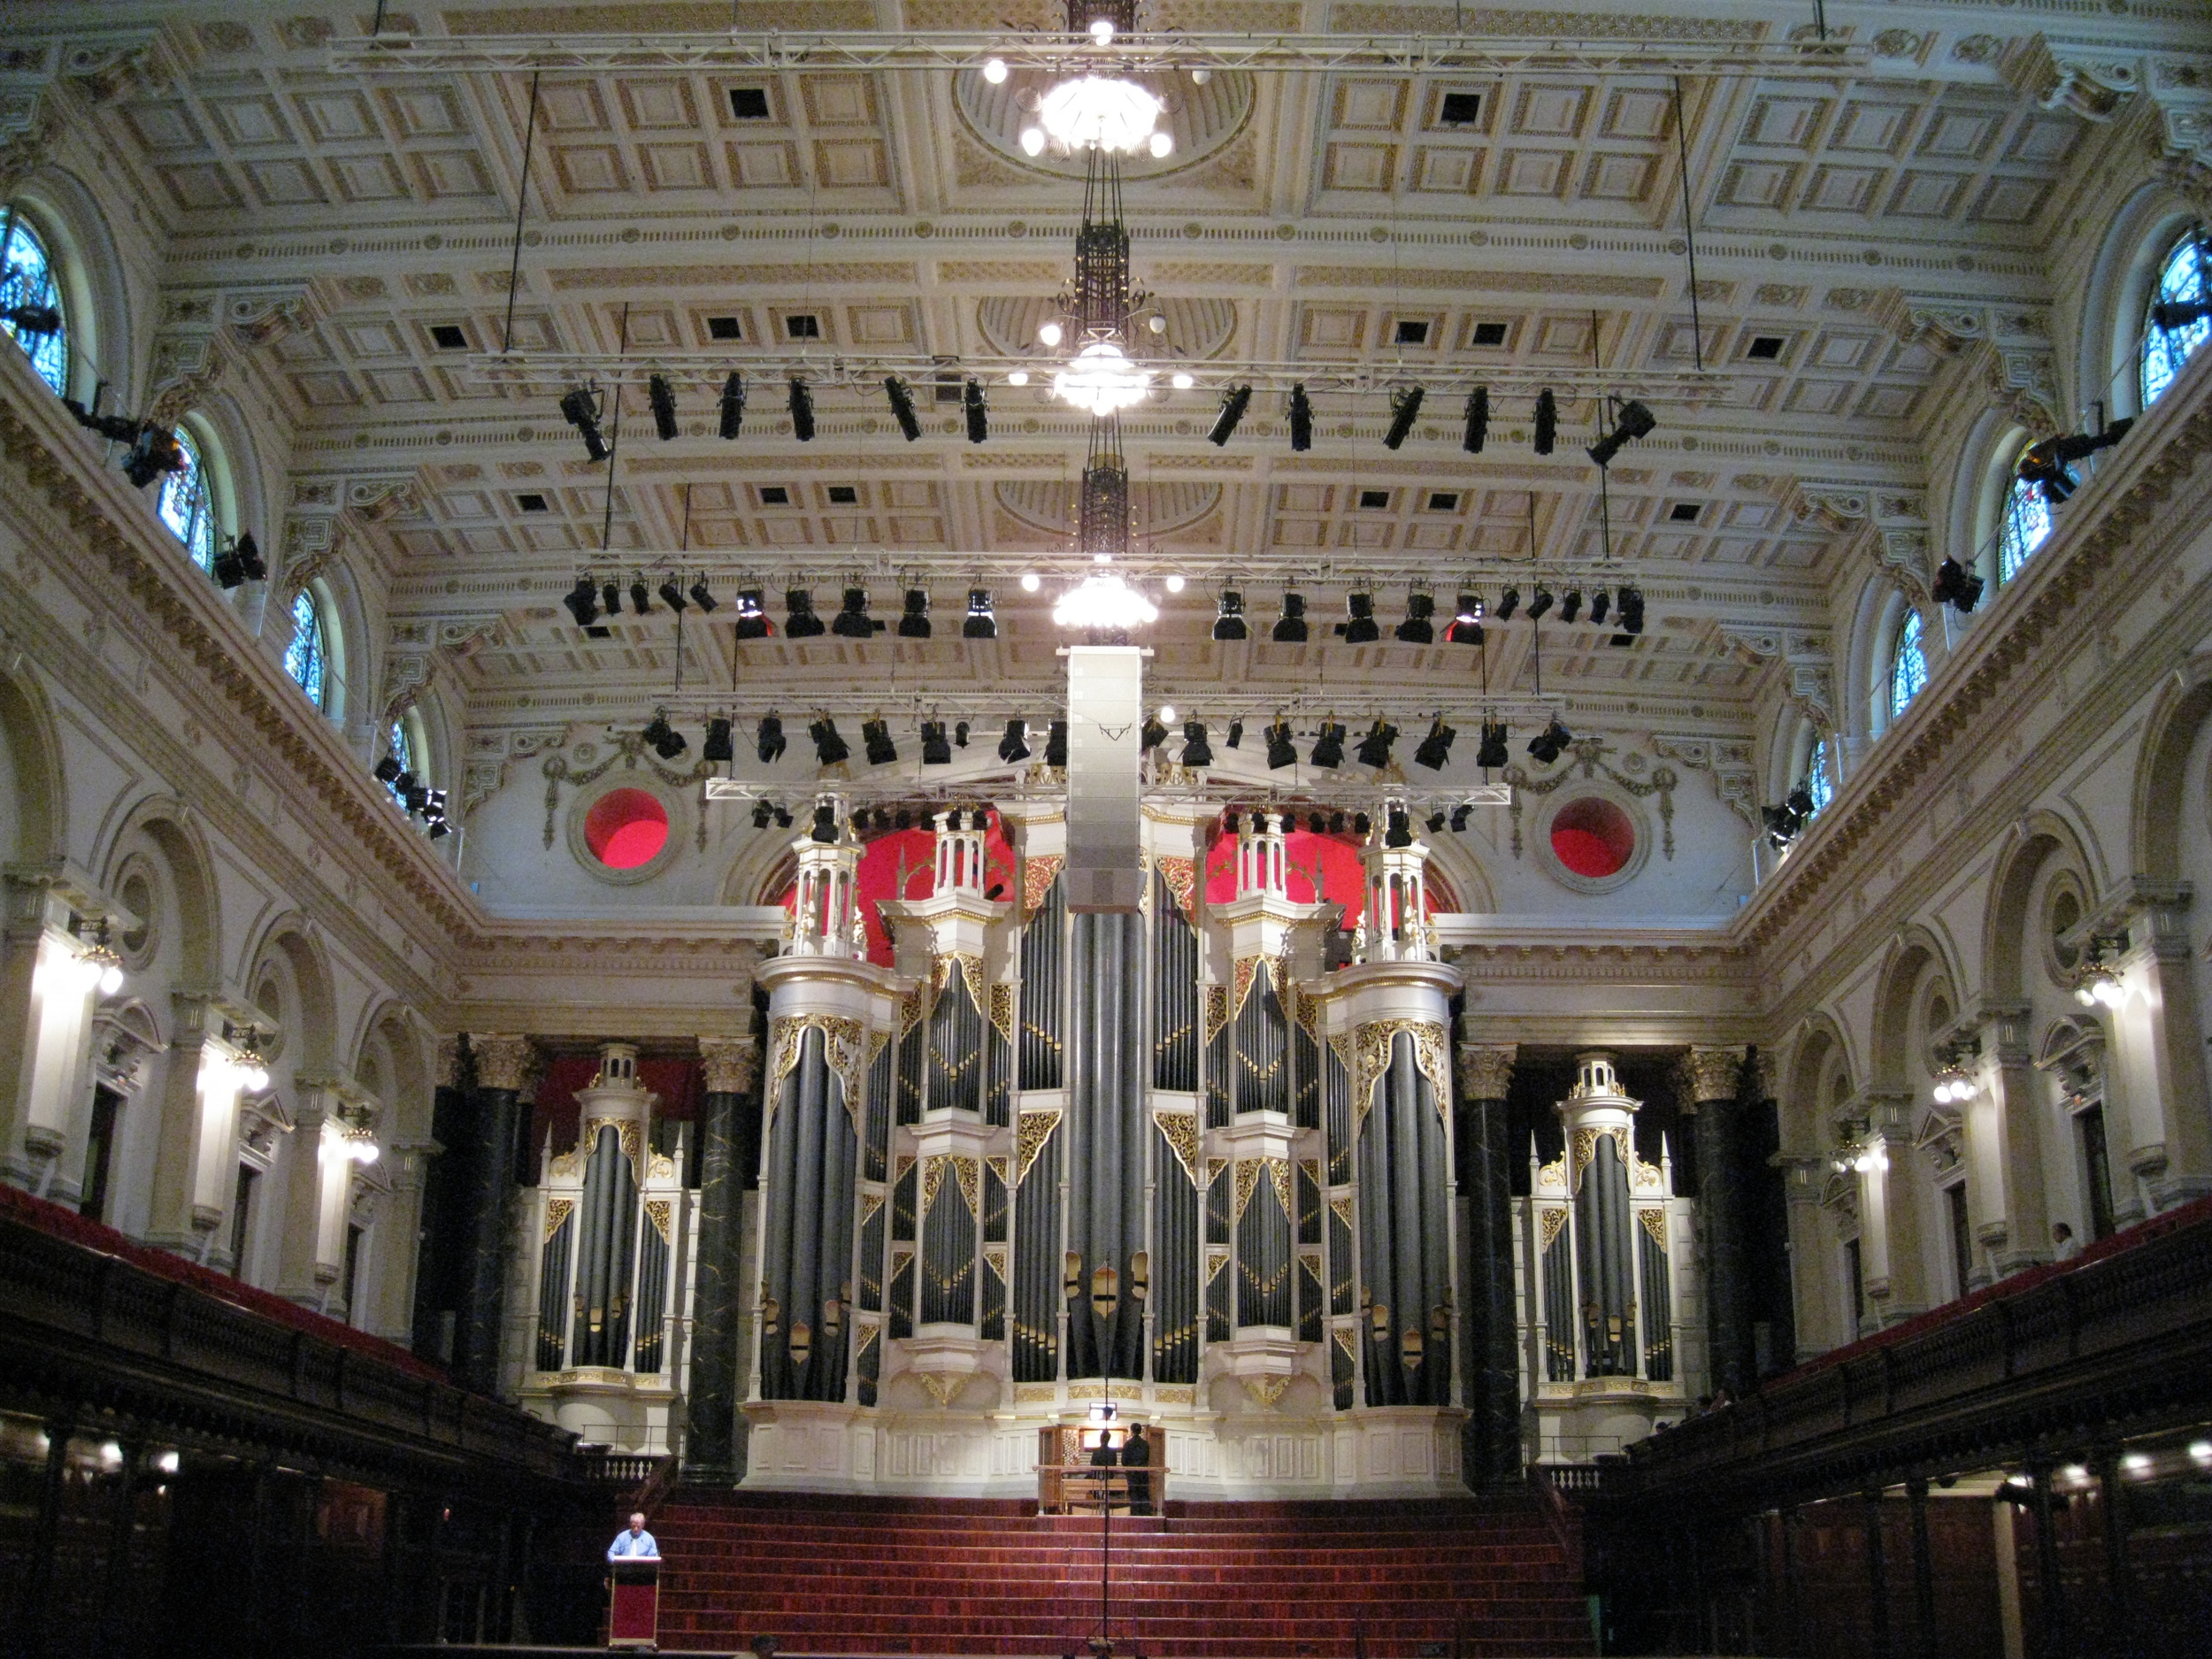 Sydney Town Hall interior